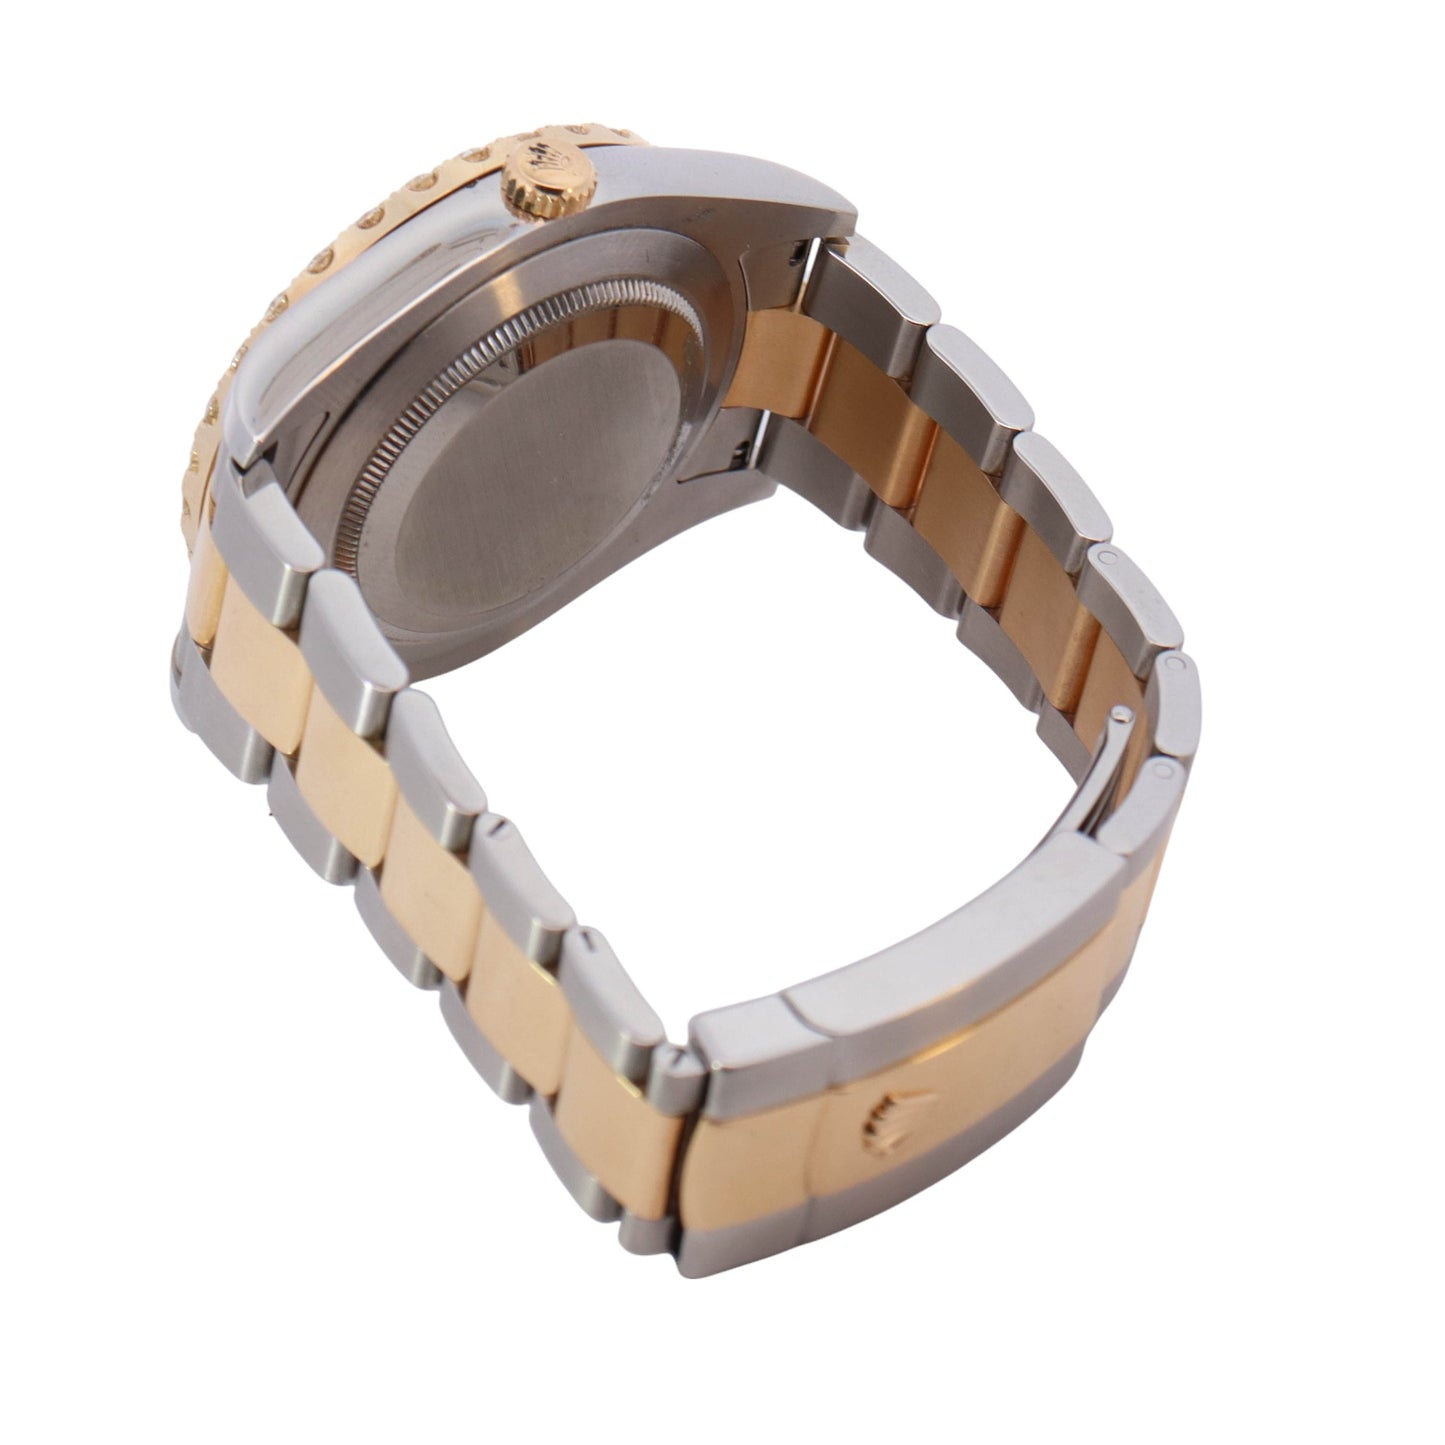 Rolex Datejust II Two-Tone Stainless Steel & Yellow Gold 41mm Wimbledon Roman Dial Watch   Reference #: 116333 - Happy Jewelers Fine Jewelry Lifetime Warranty